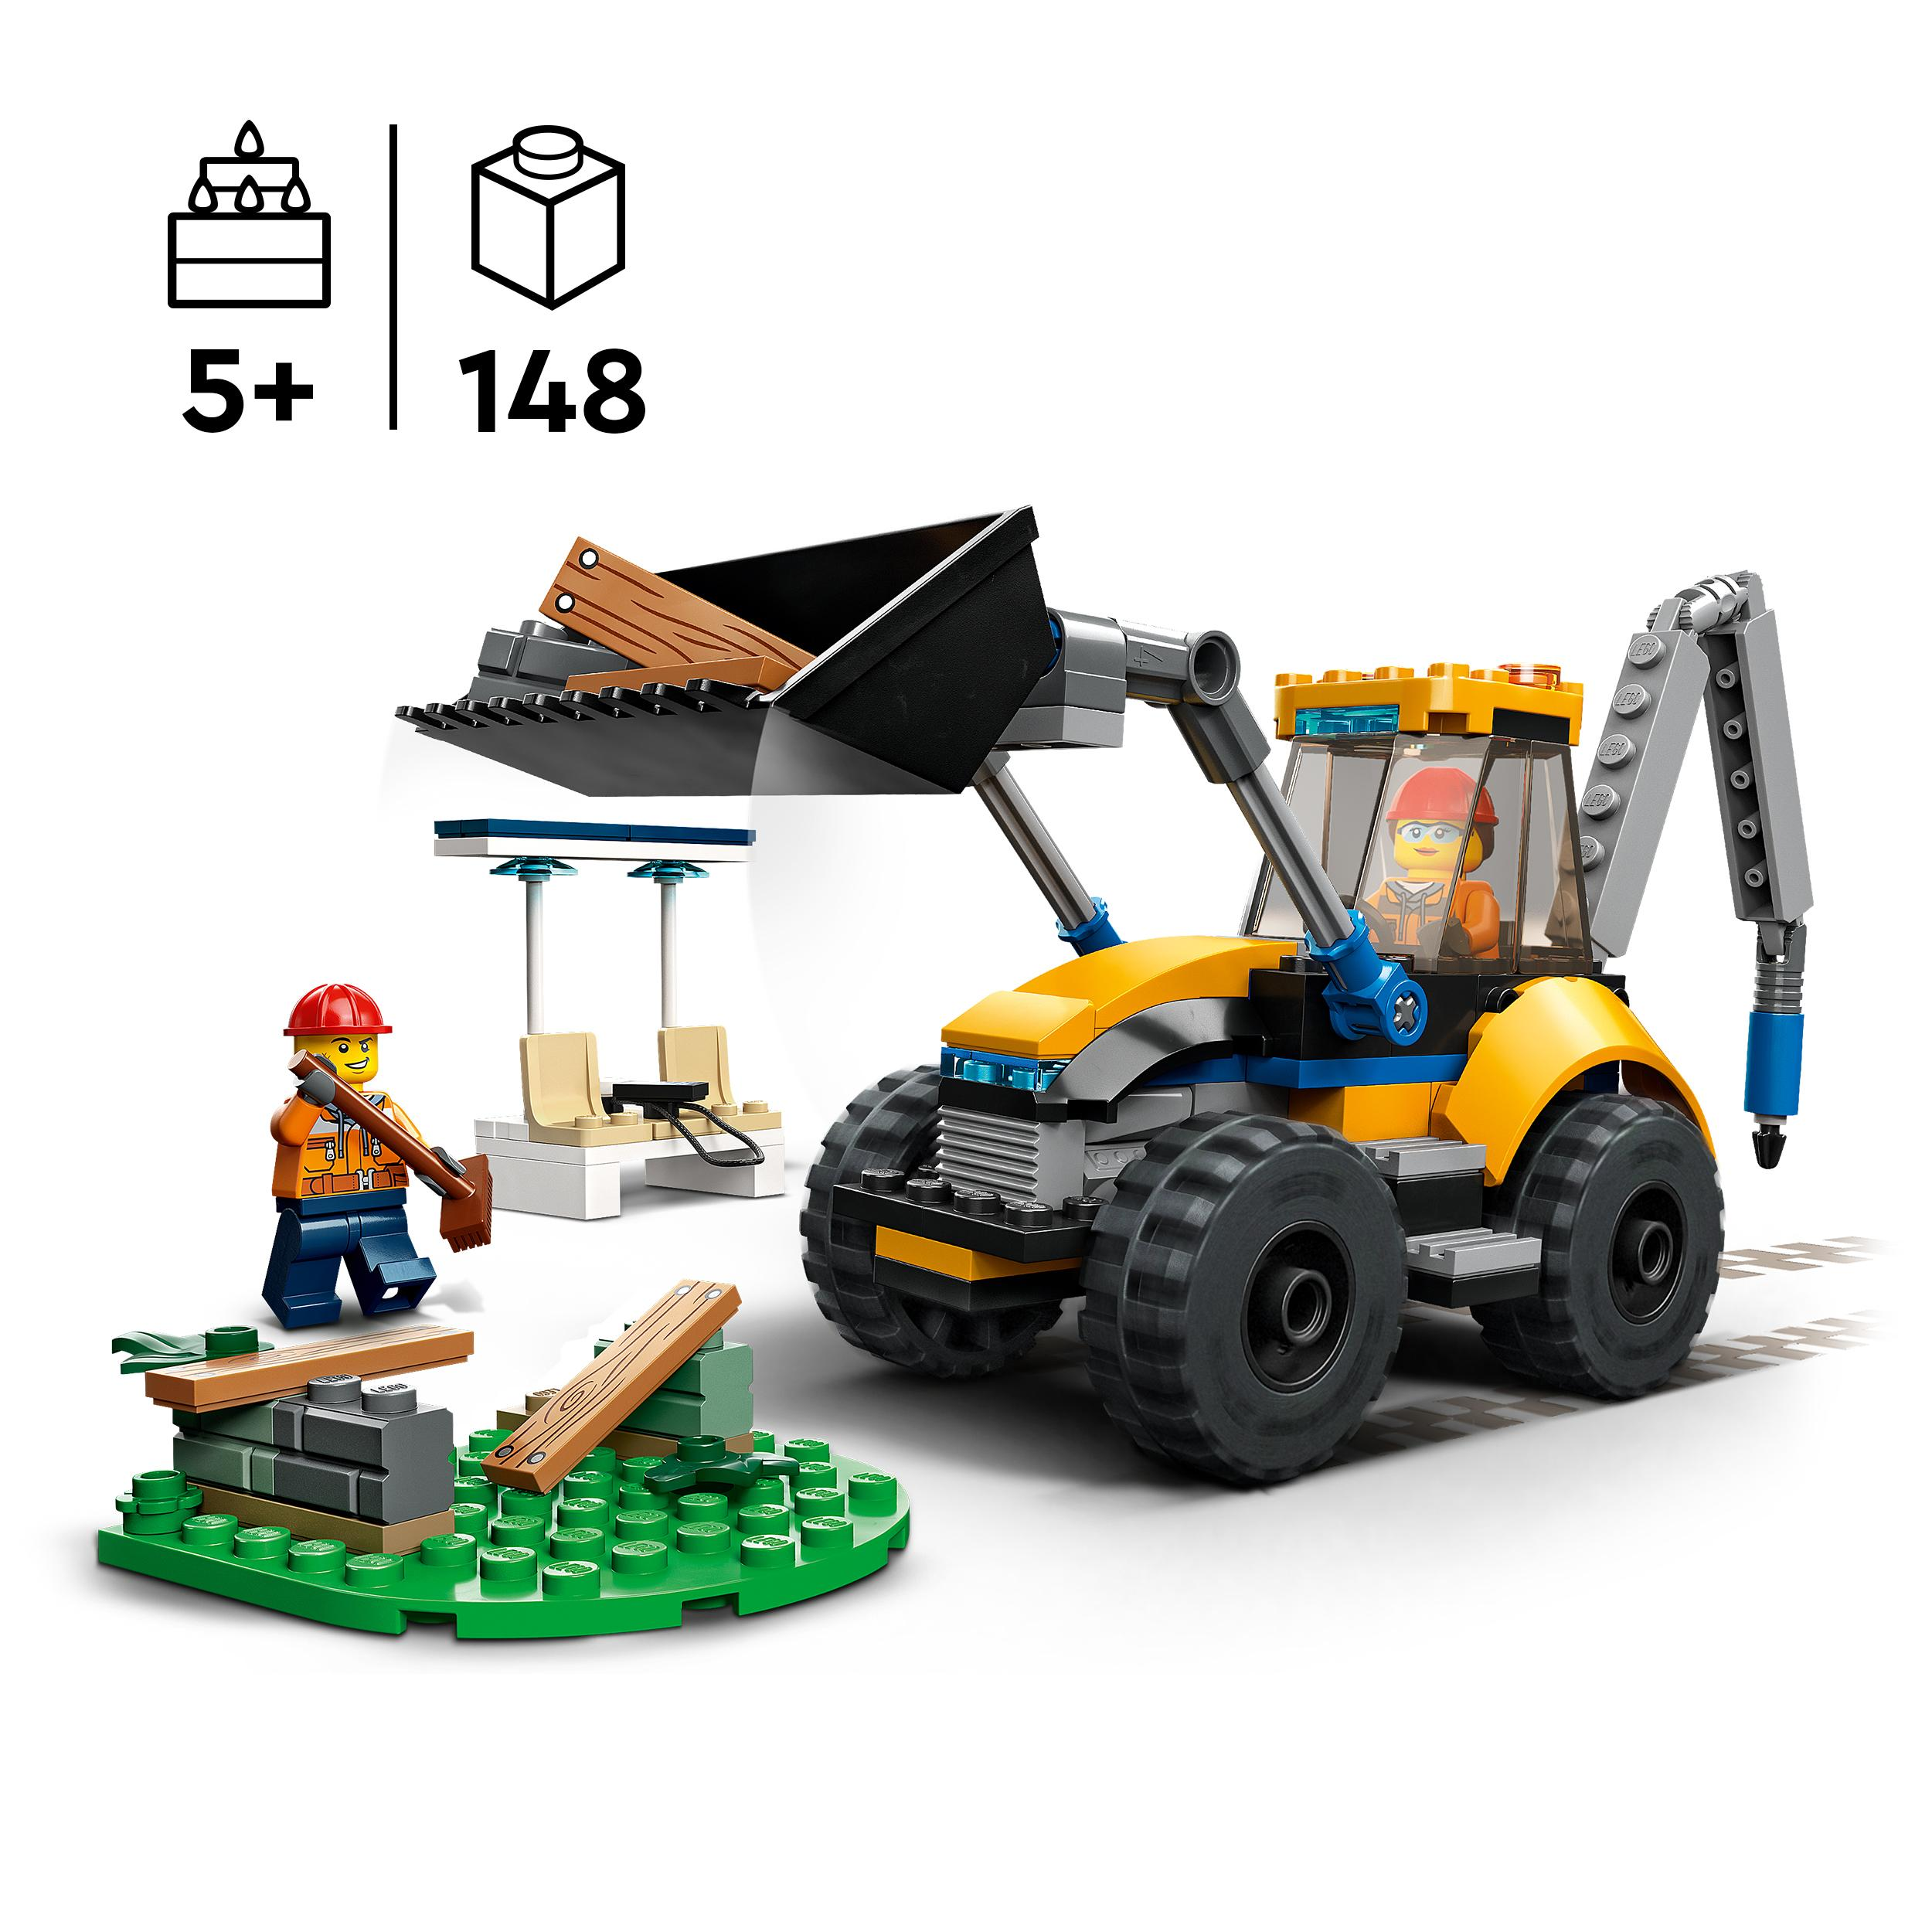 Radlader Bausatz, 60385 Mehrfarbig City LEGO